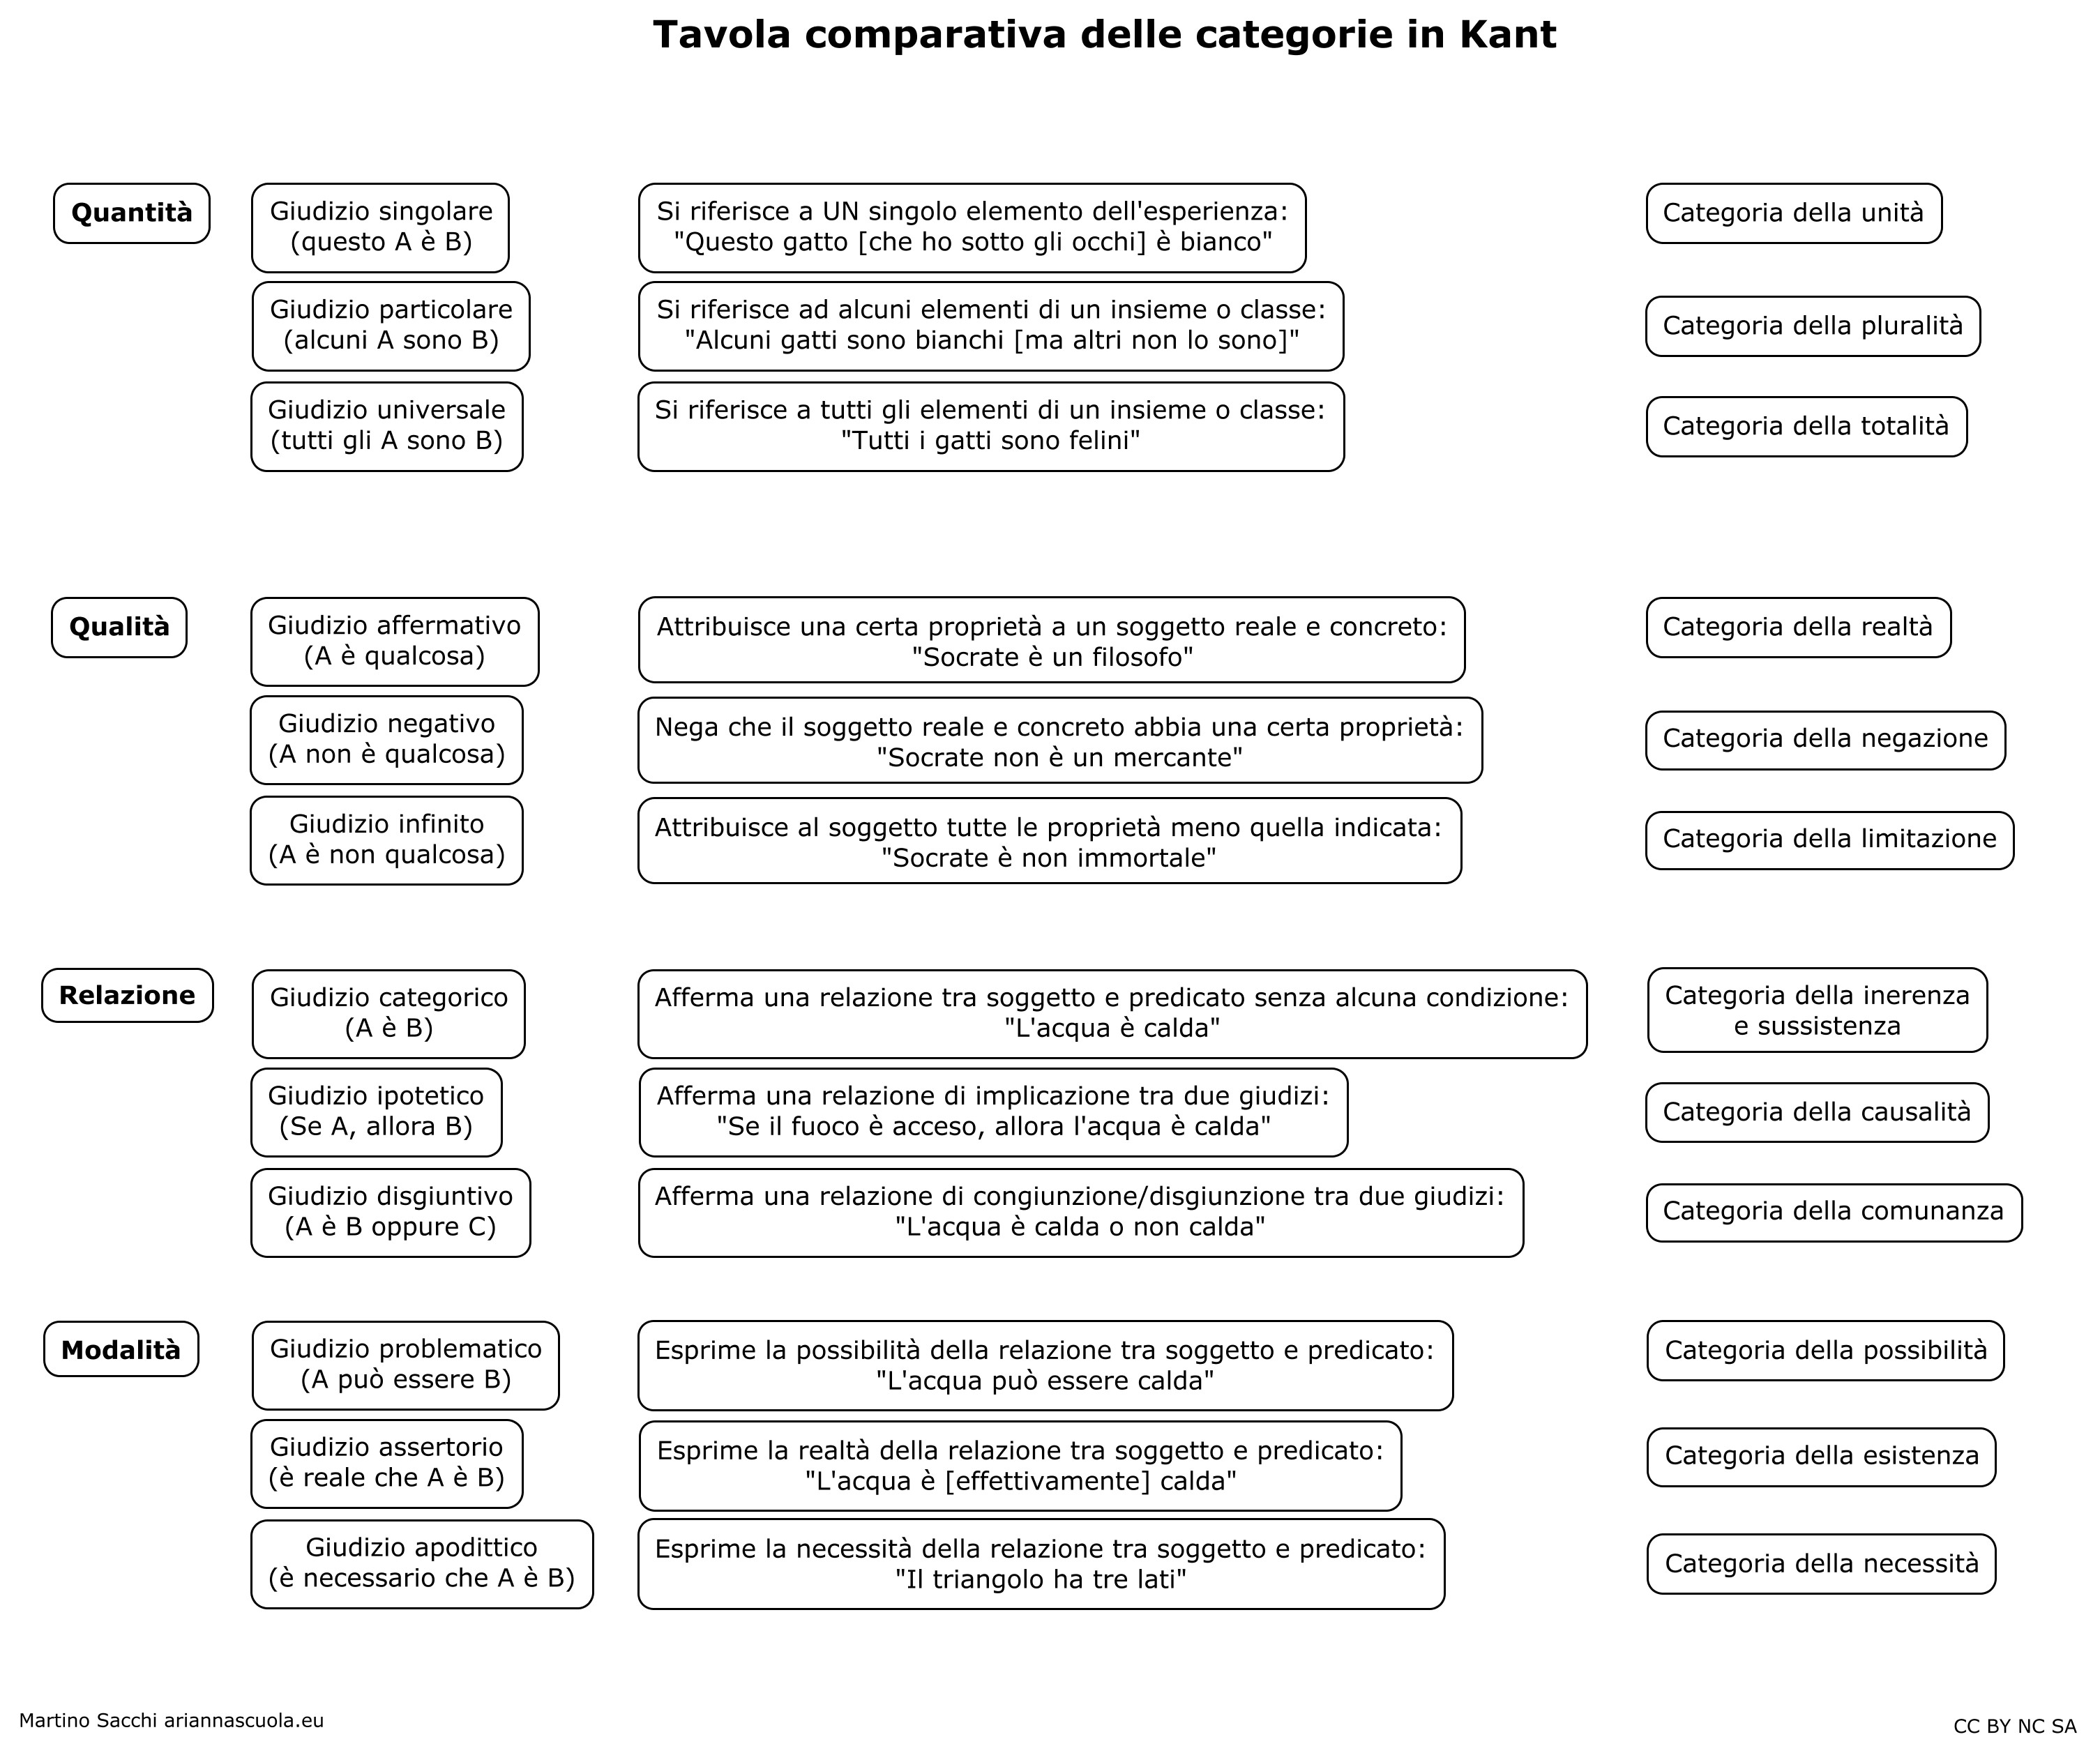 Kant tavola comparativa categorie